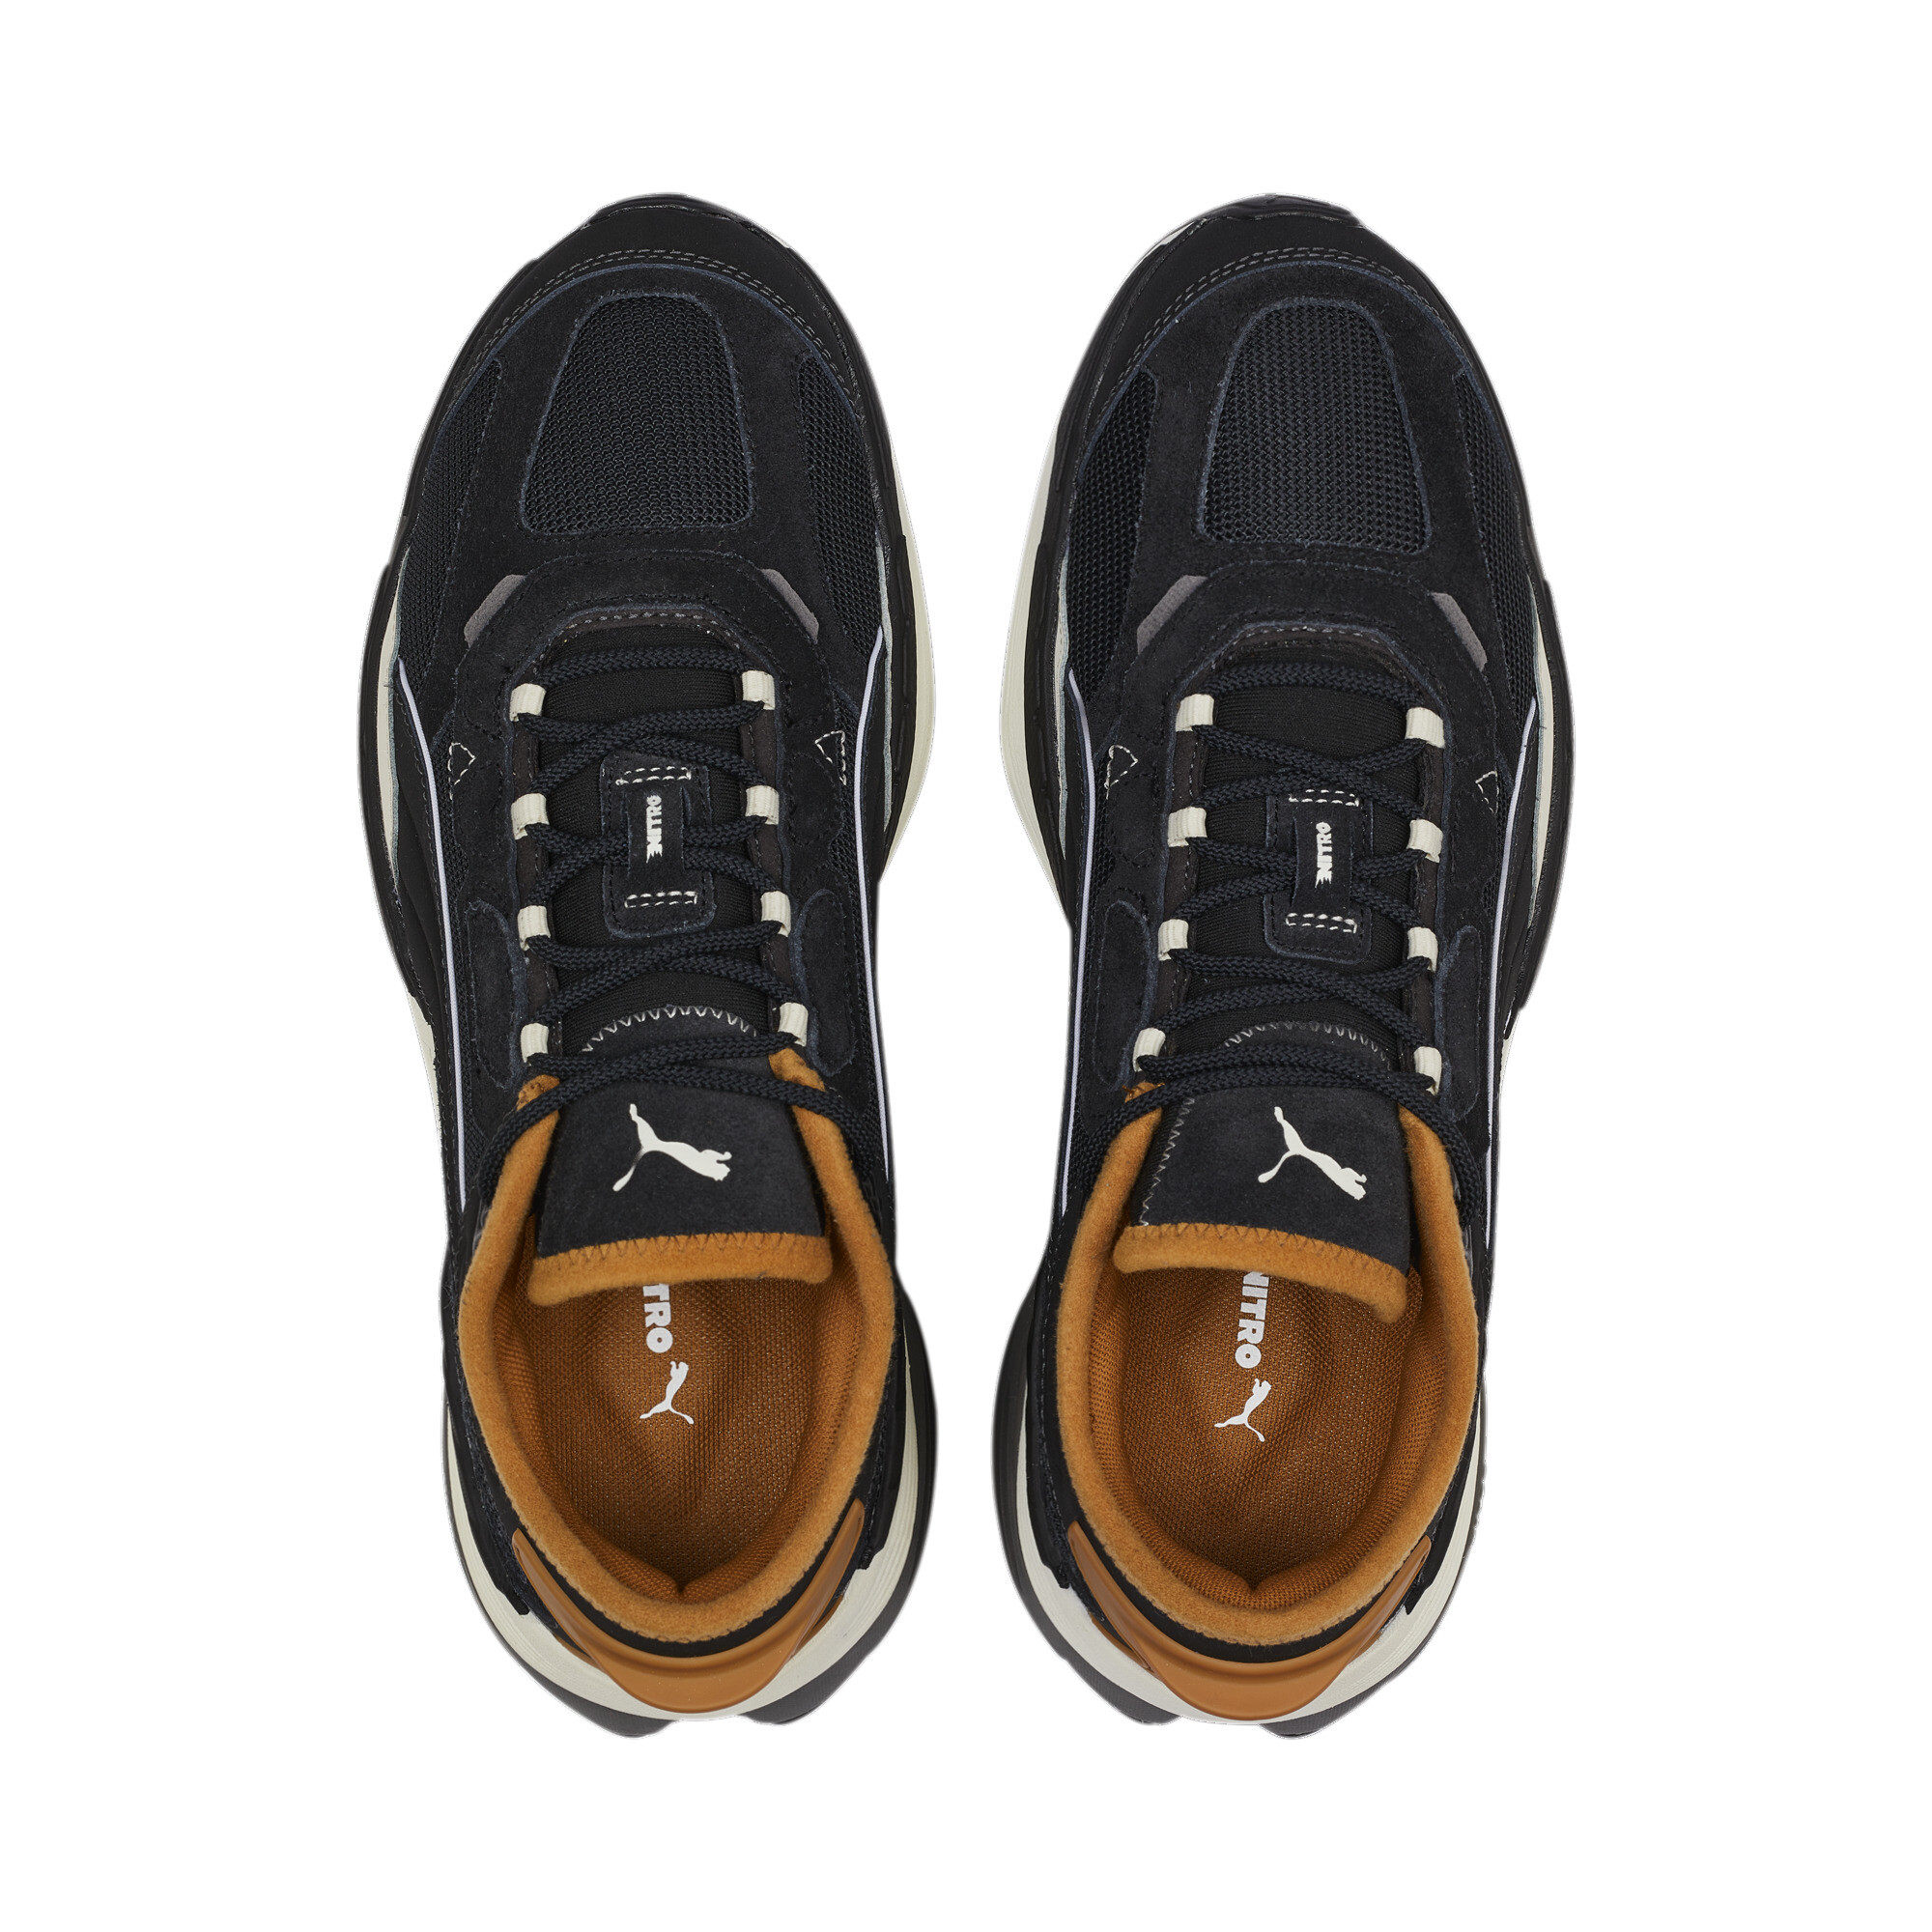 Men's PUMA Extent Nitro Heritage Sneakers In Black, Size EU 44.5